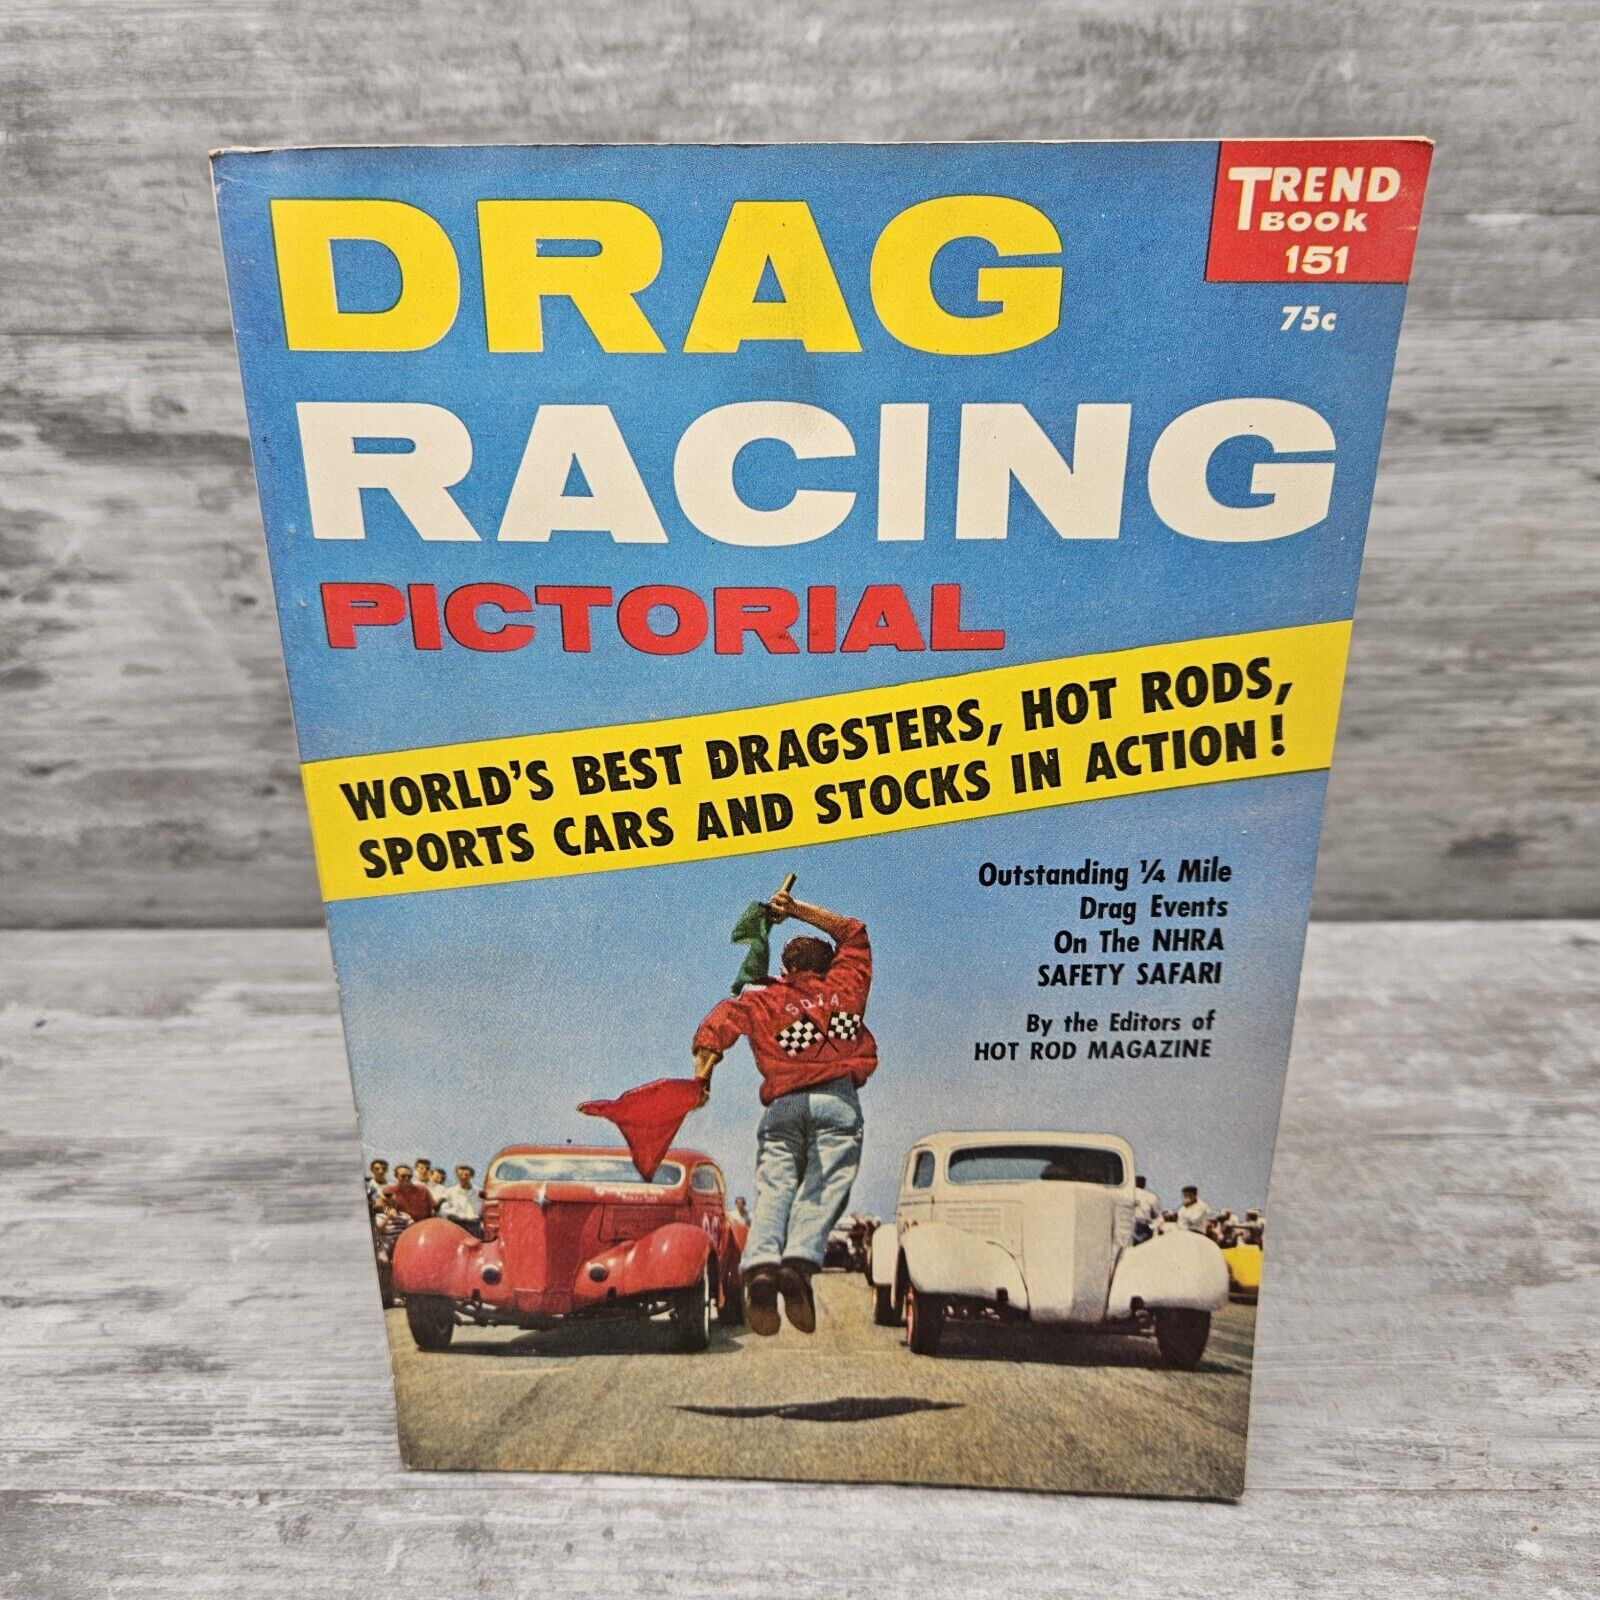 Drag Racing Pictorial Trend Book 151 1957